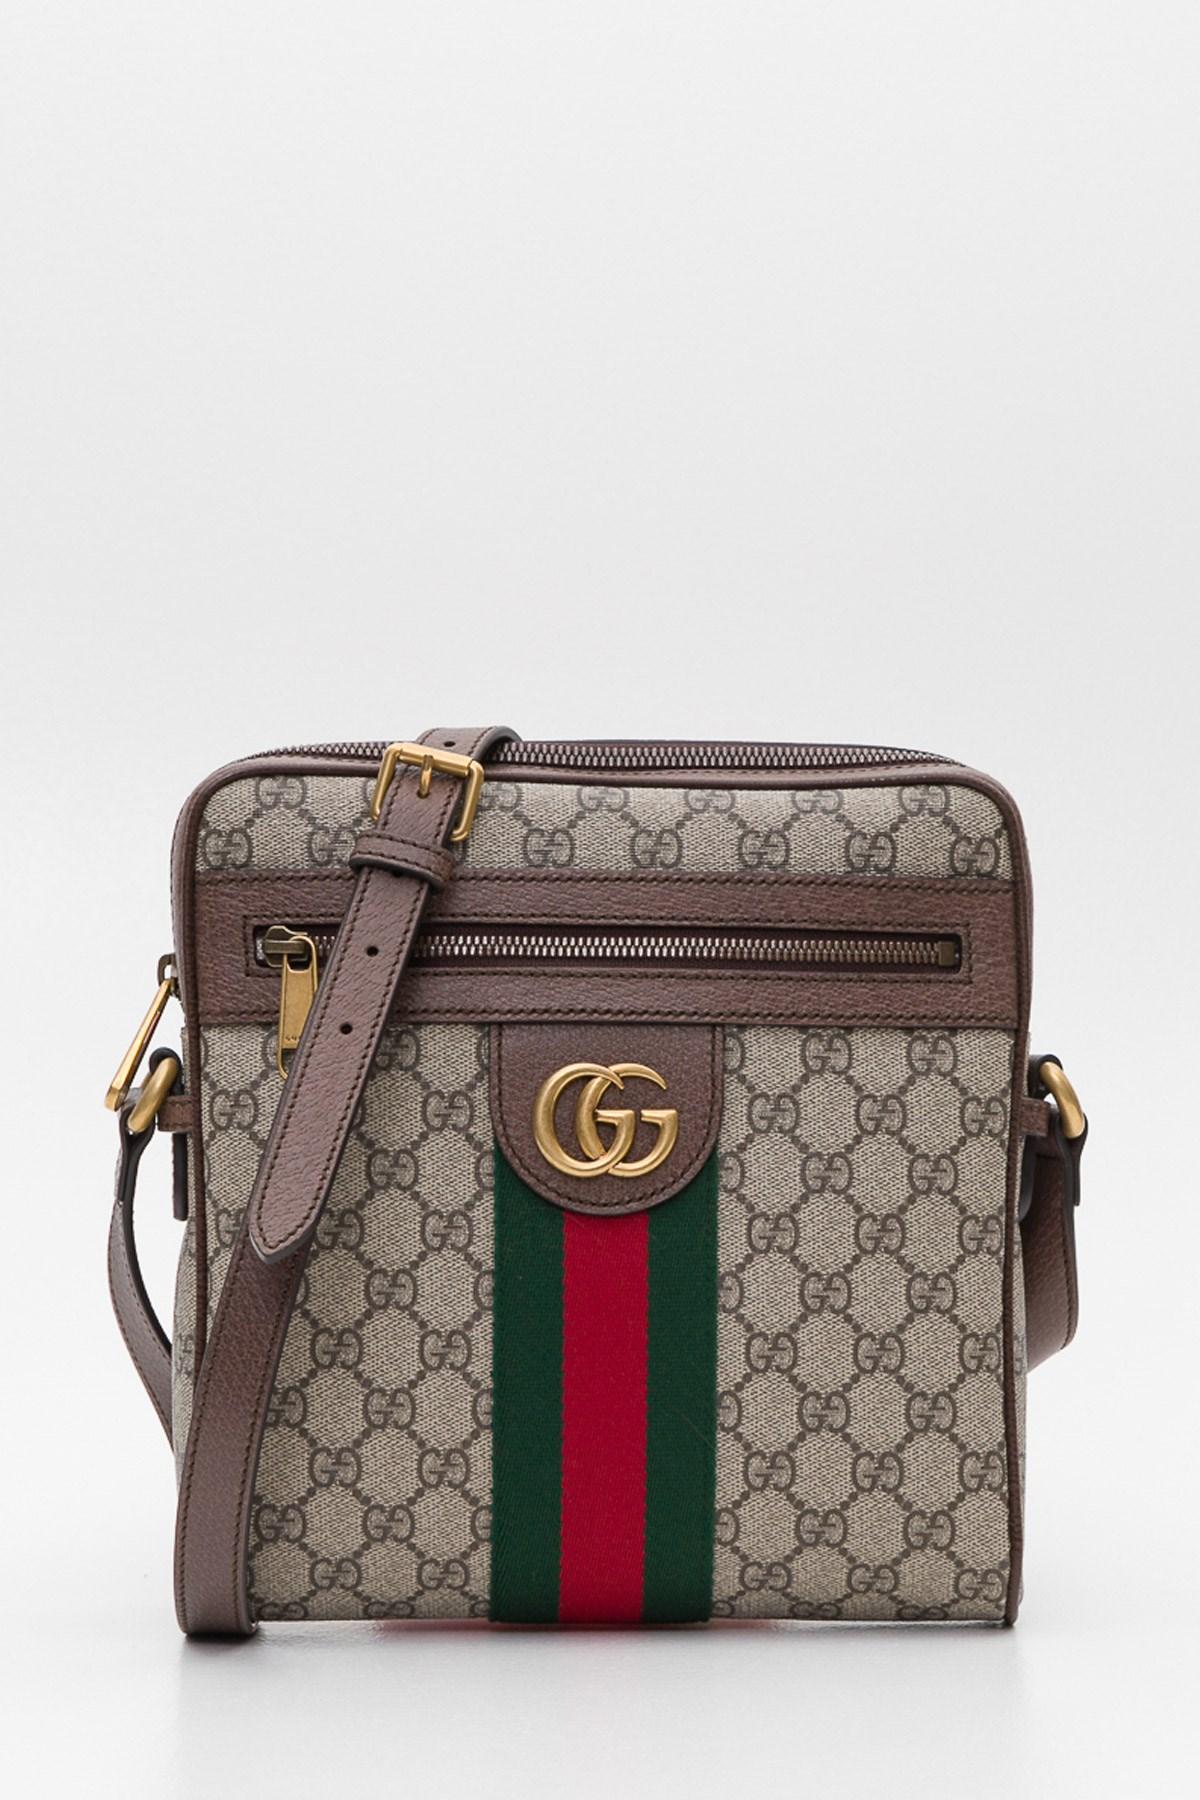 Gucci Canvas Medium Ophidia Gg Supreme Messenger Bag in Beige (Natural ...